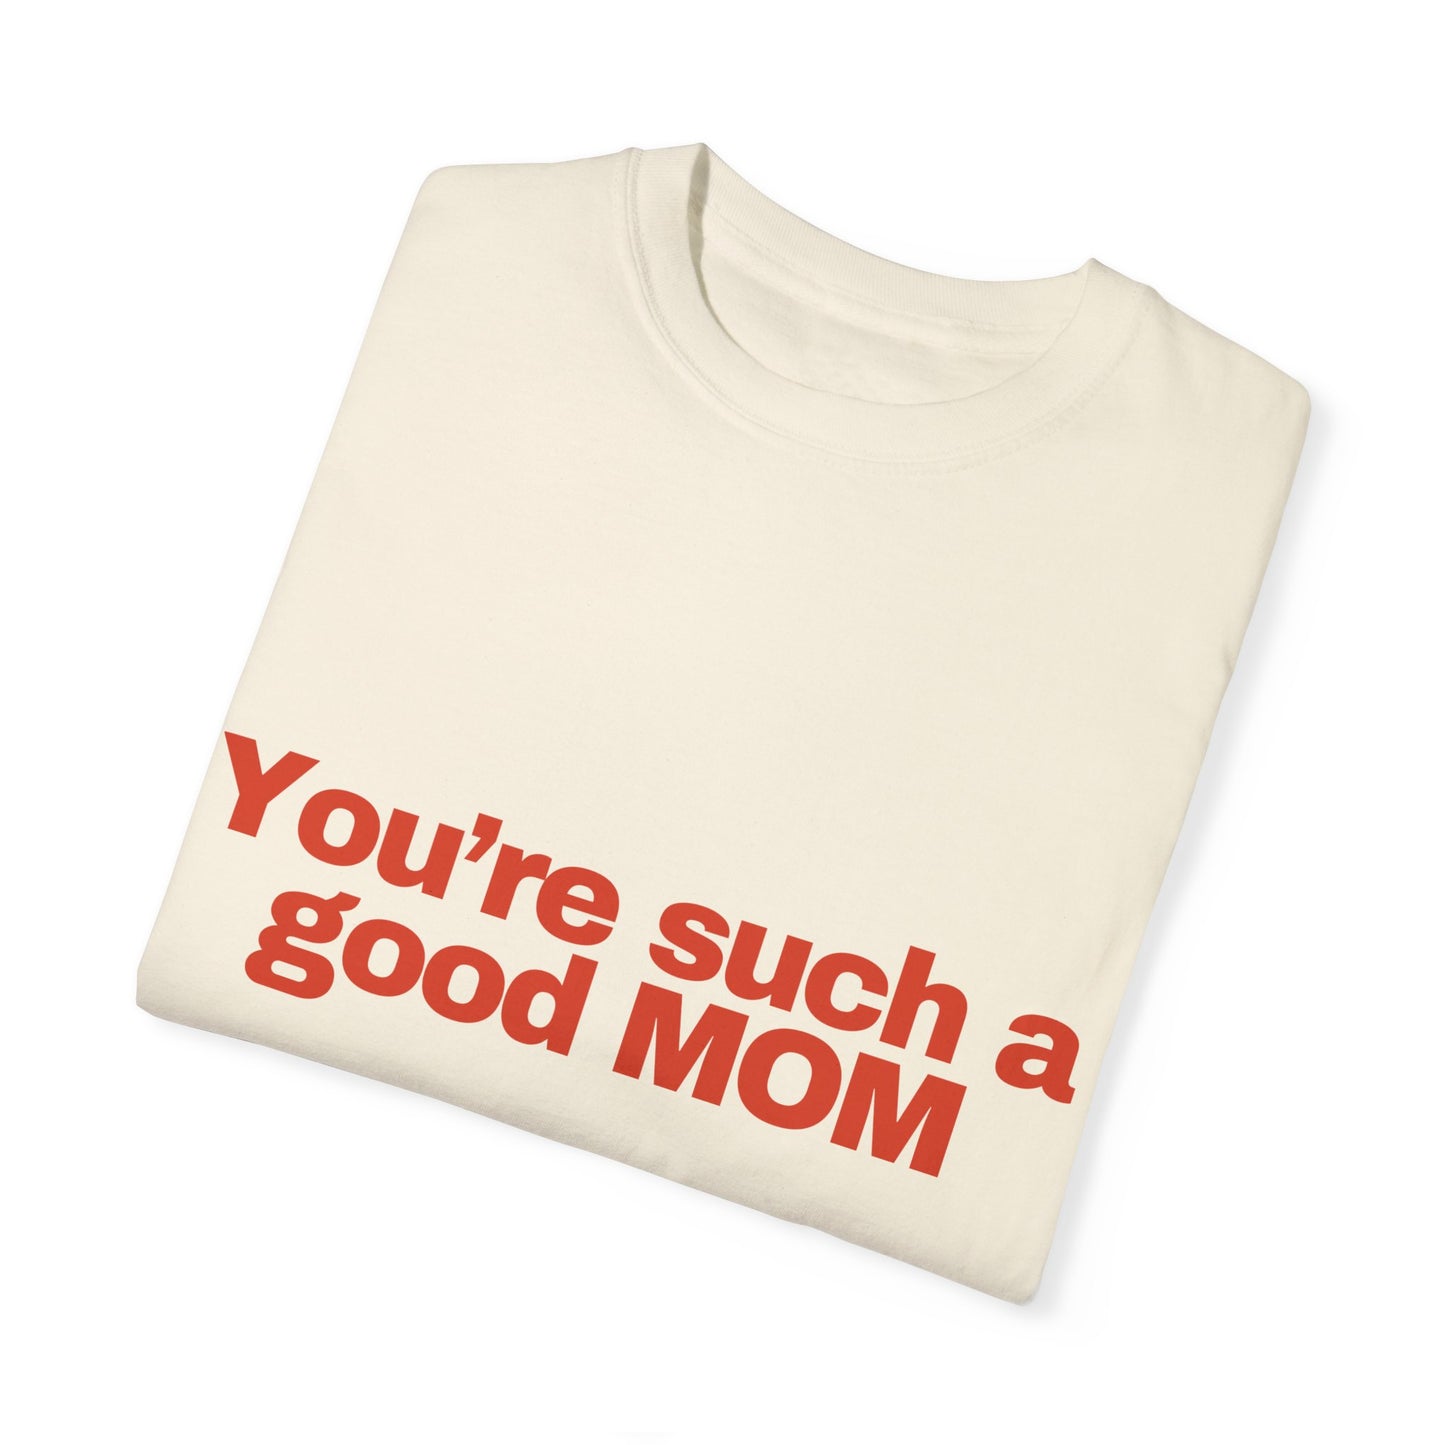 Such a good Mom T-shirt